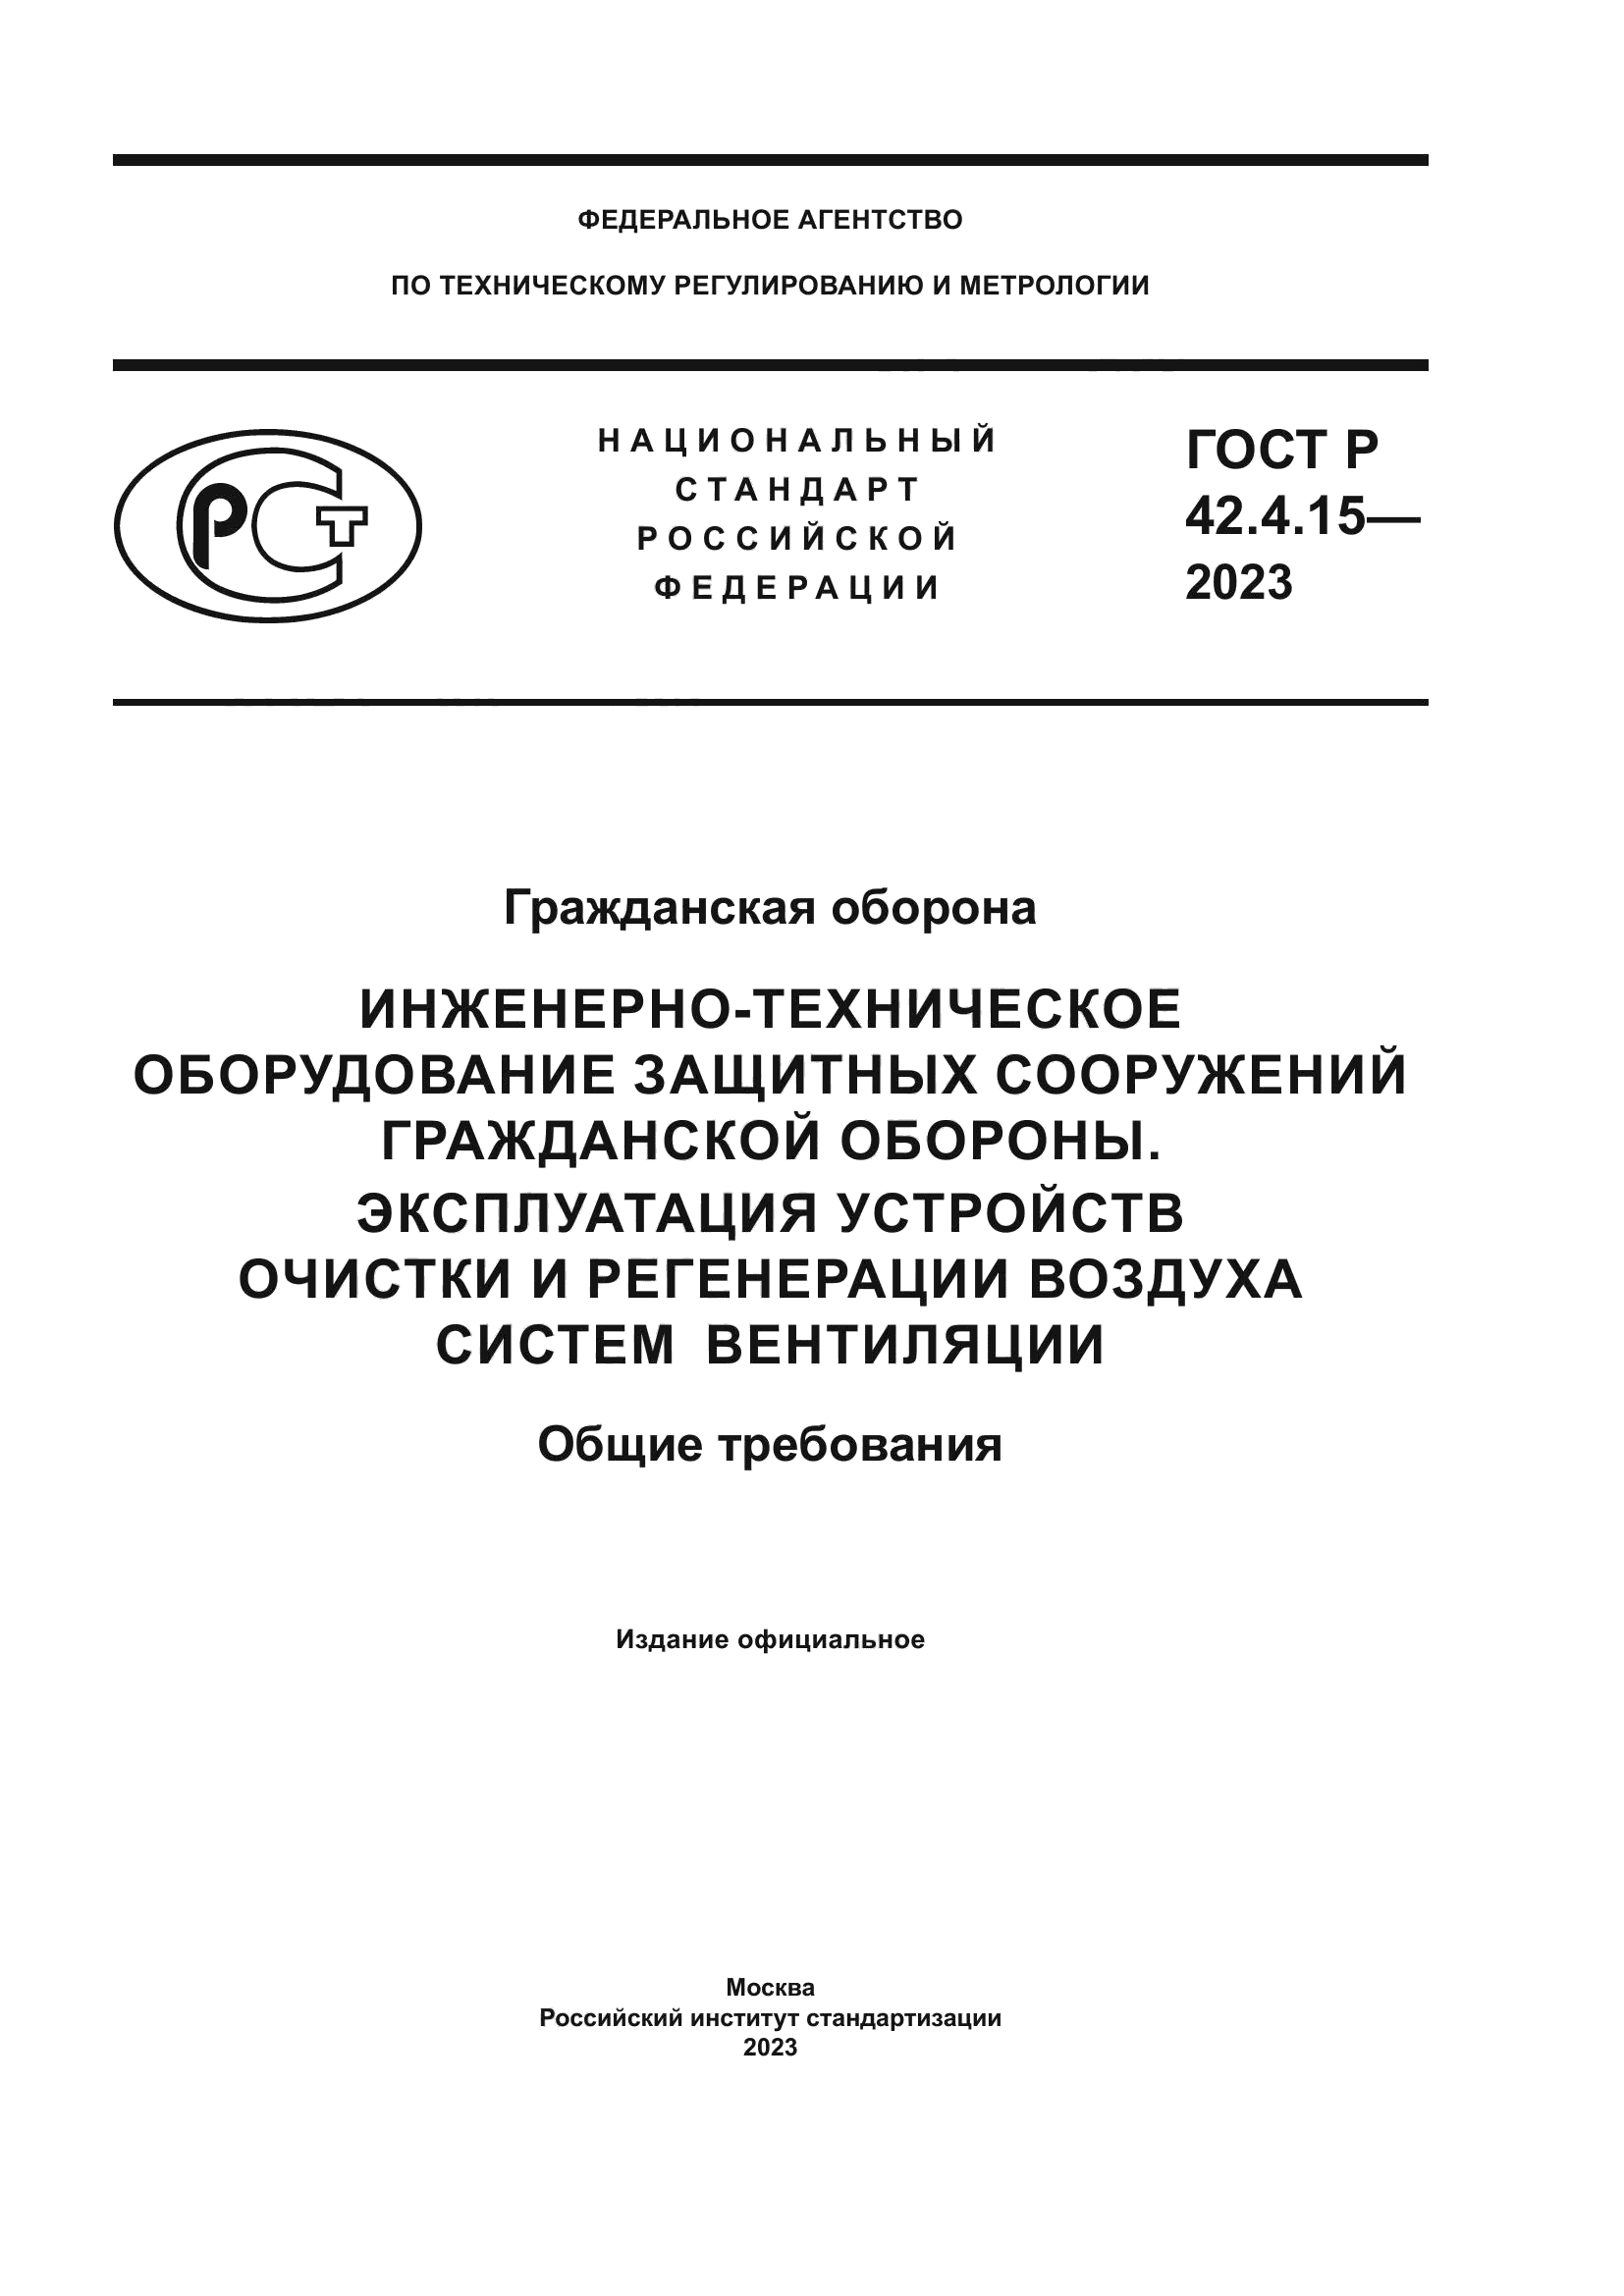 ГОСТ Р 42.4.15-2023